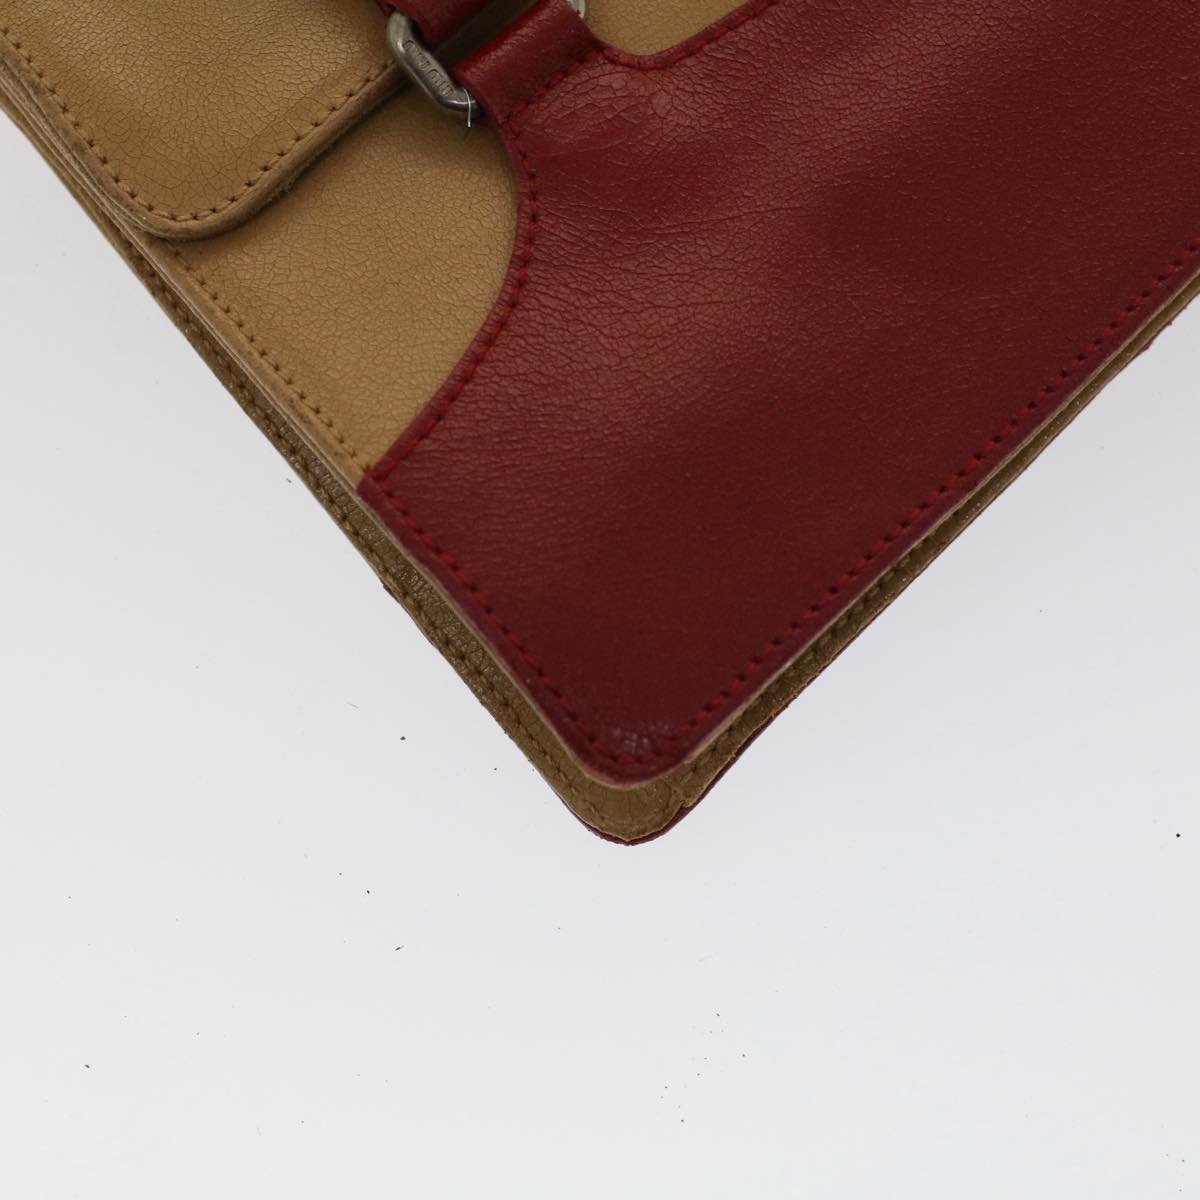 Miu Miu Hand Bag Leather 2Set Pink Red beige Auth bs7460